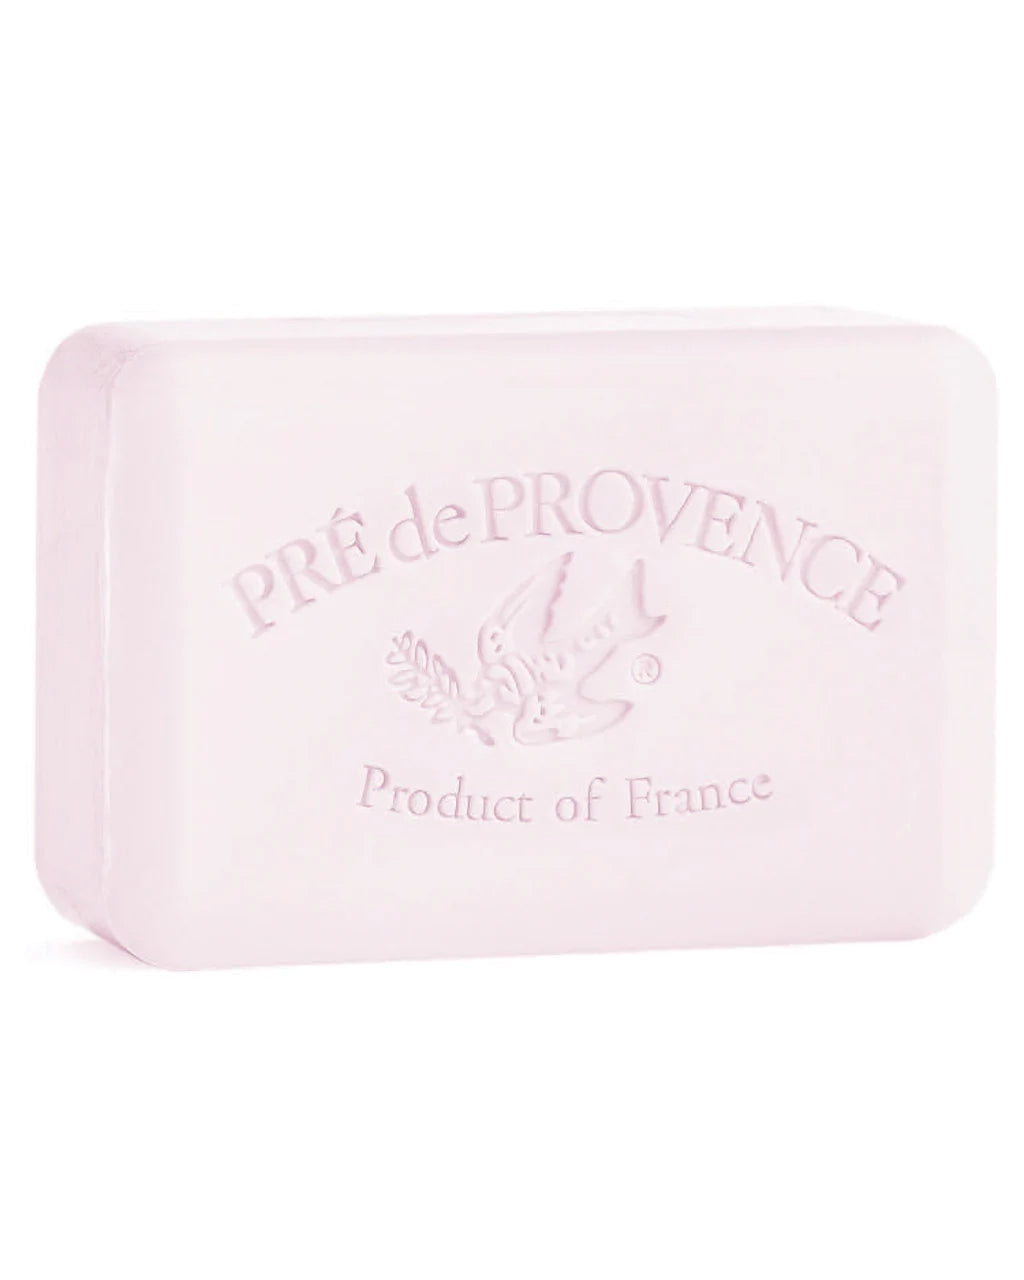 Pre de Provence Shea Butter Enriched Soap - Wildflower